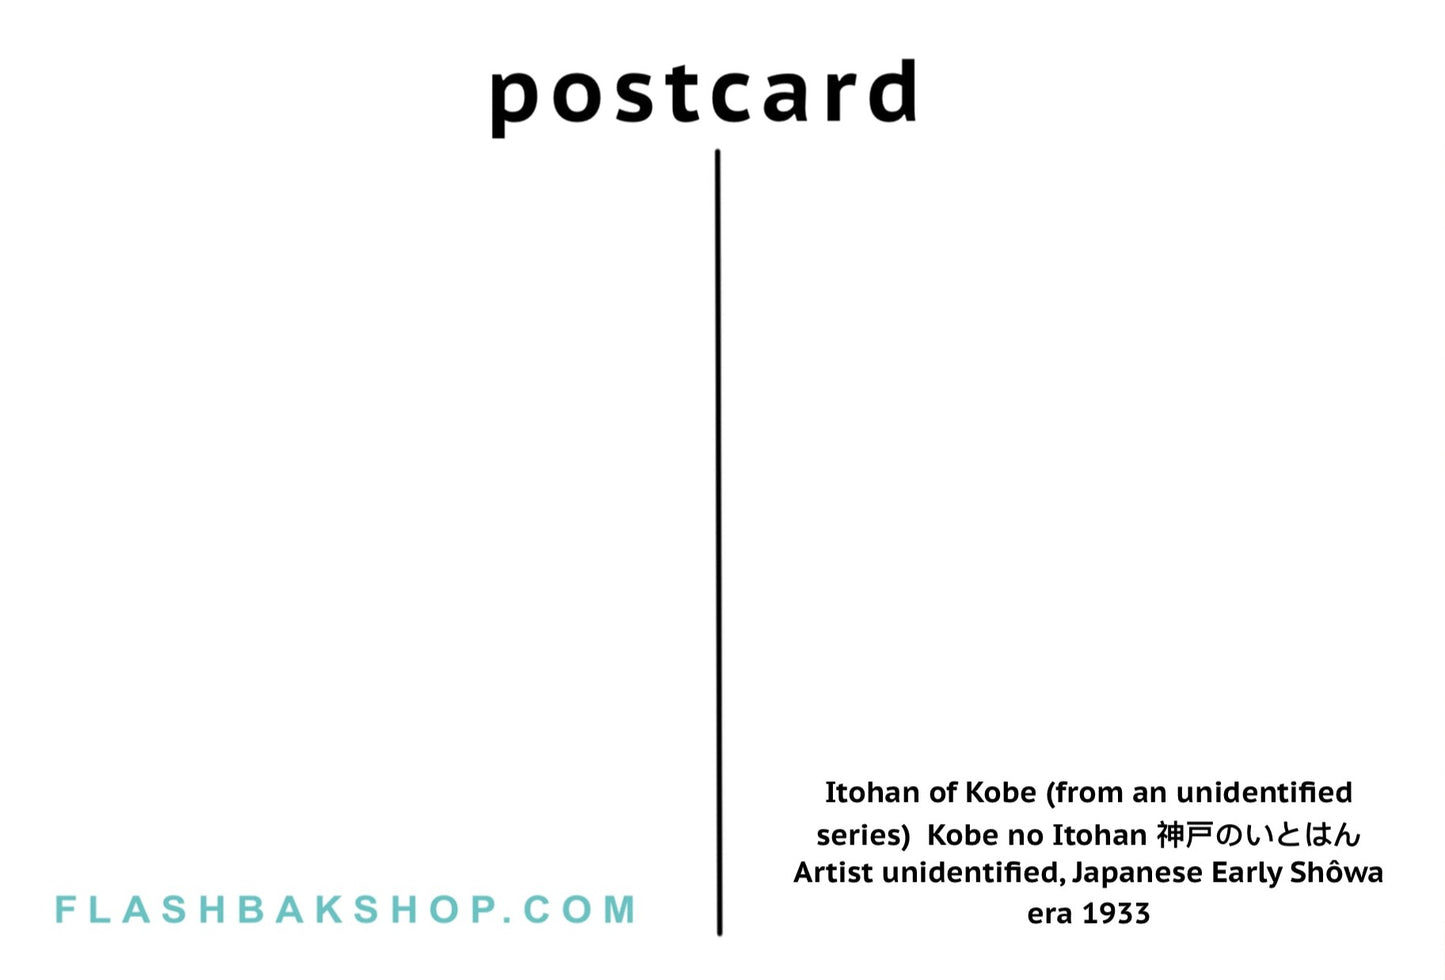 Itohan de Kobe, 1933 - Carte postale